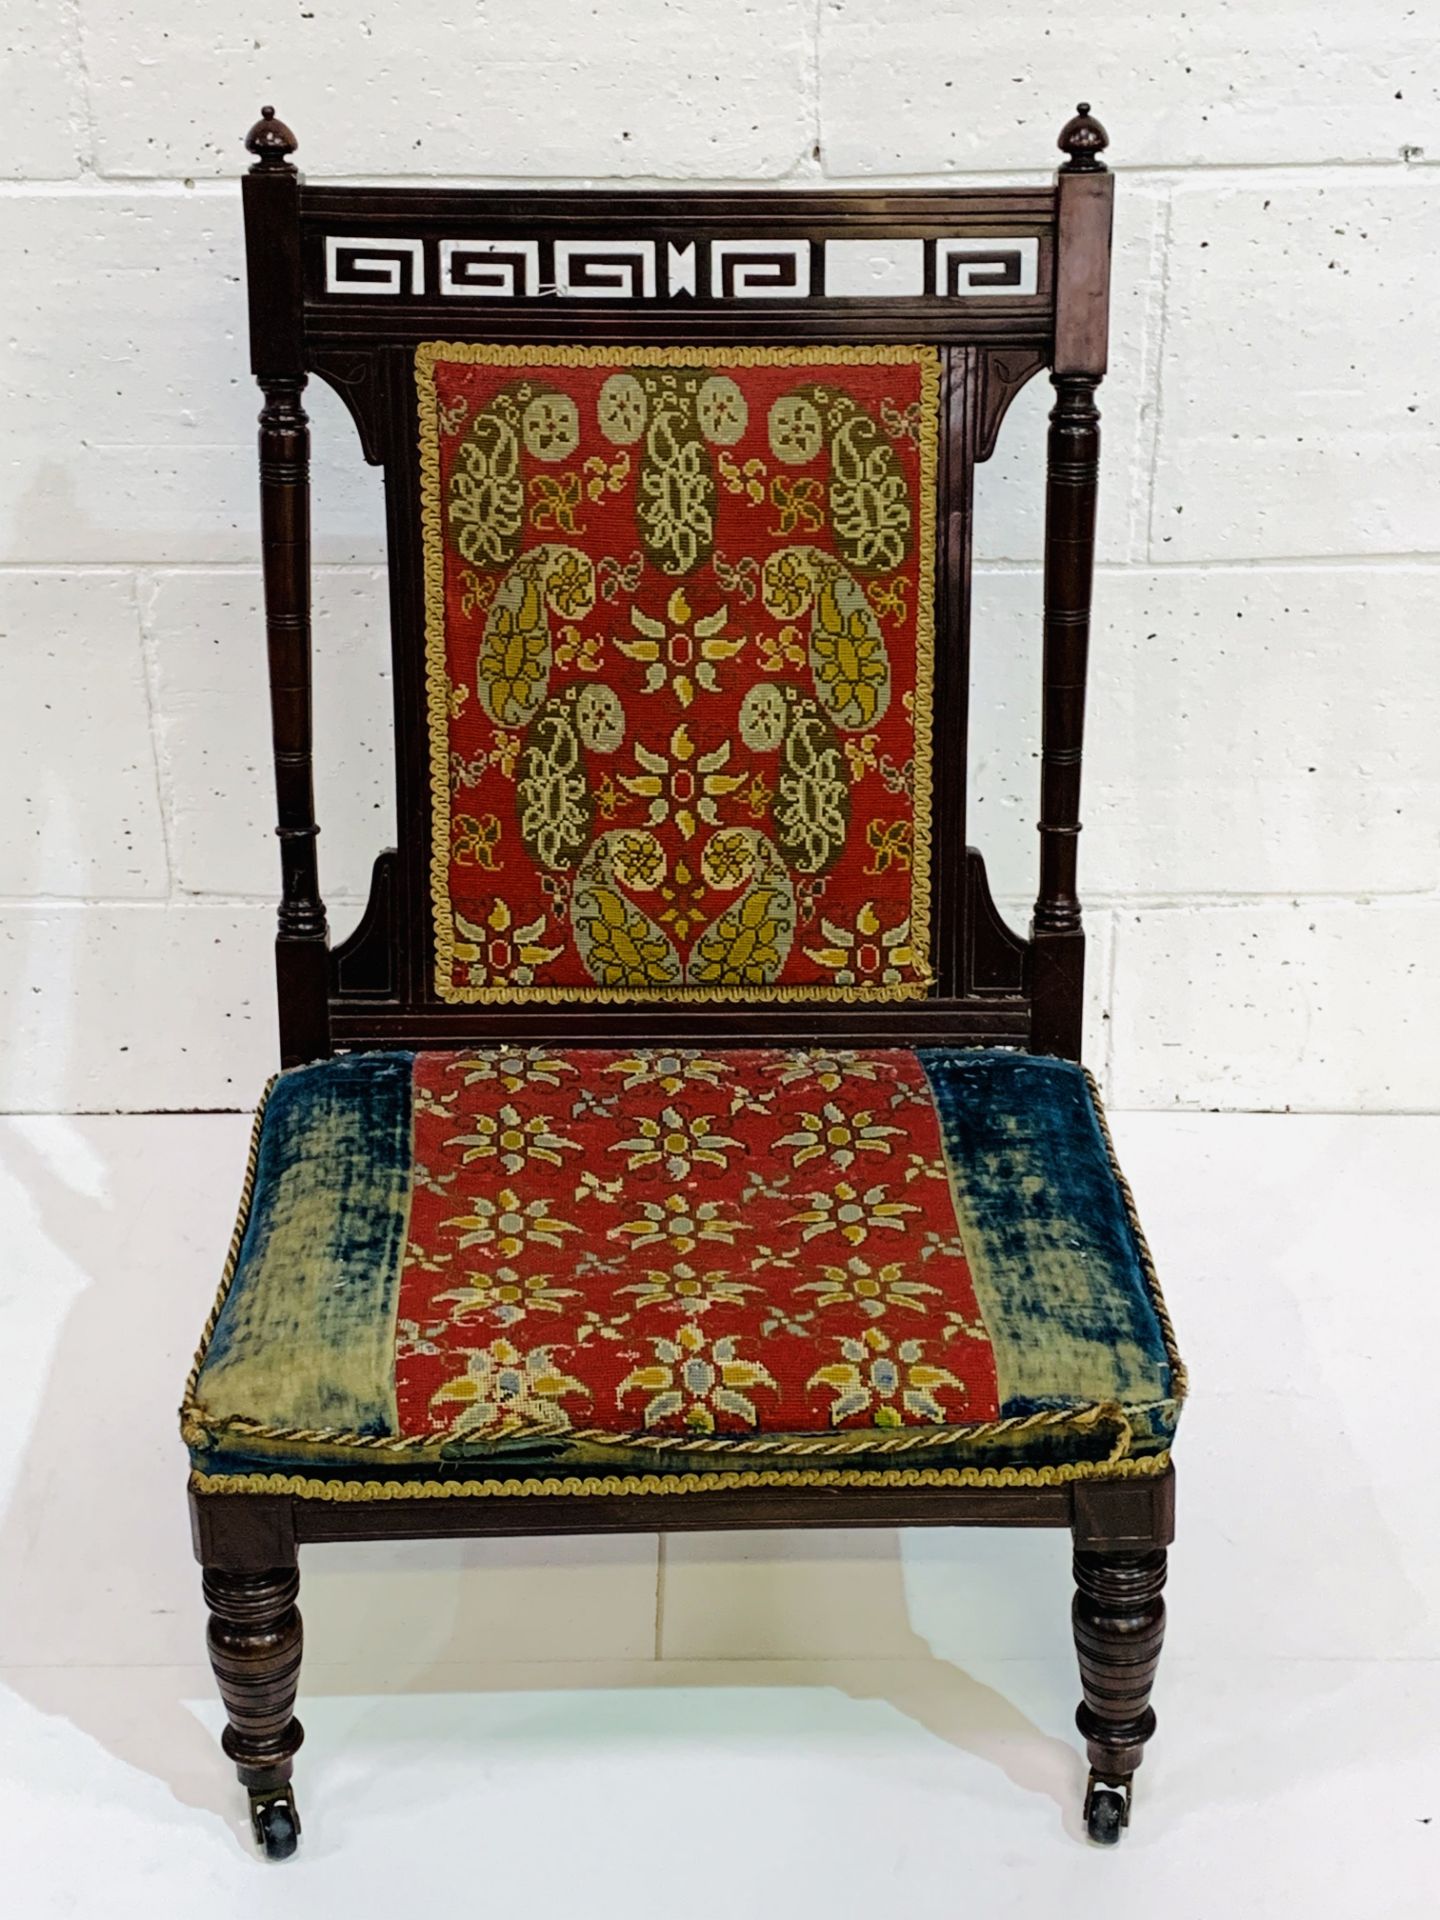 French Mahogany 19th Century nursing chair with original fabric.